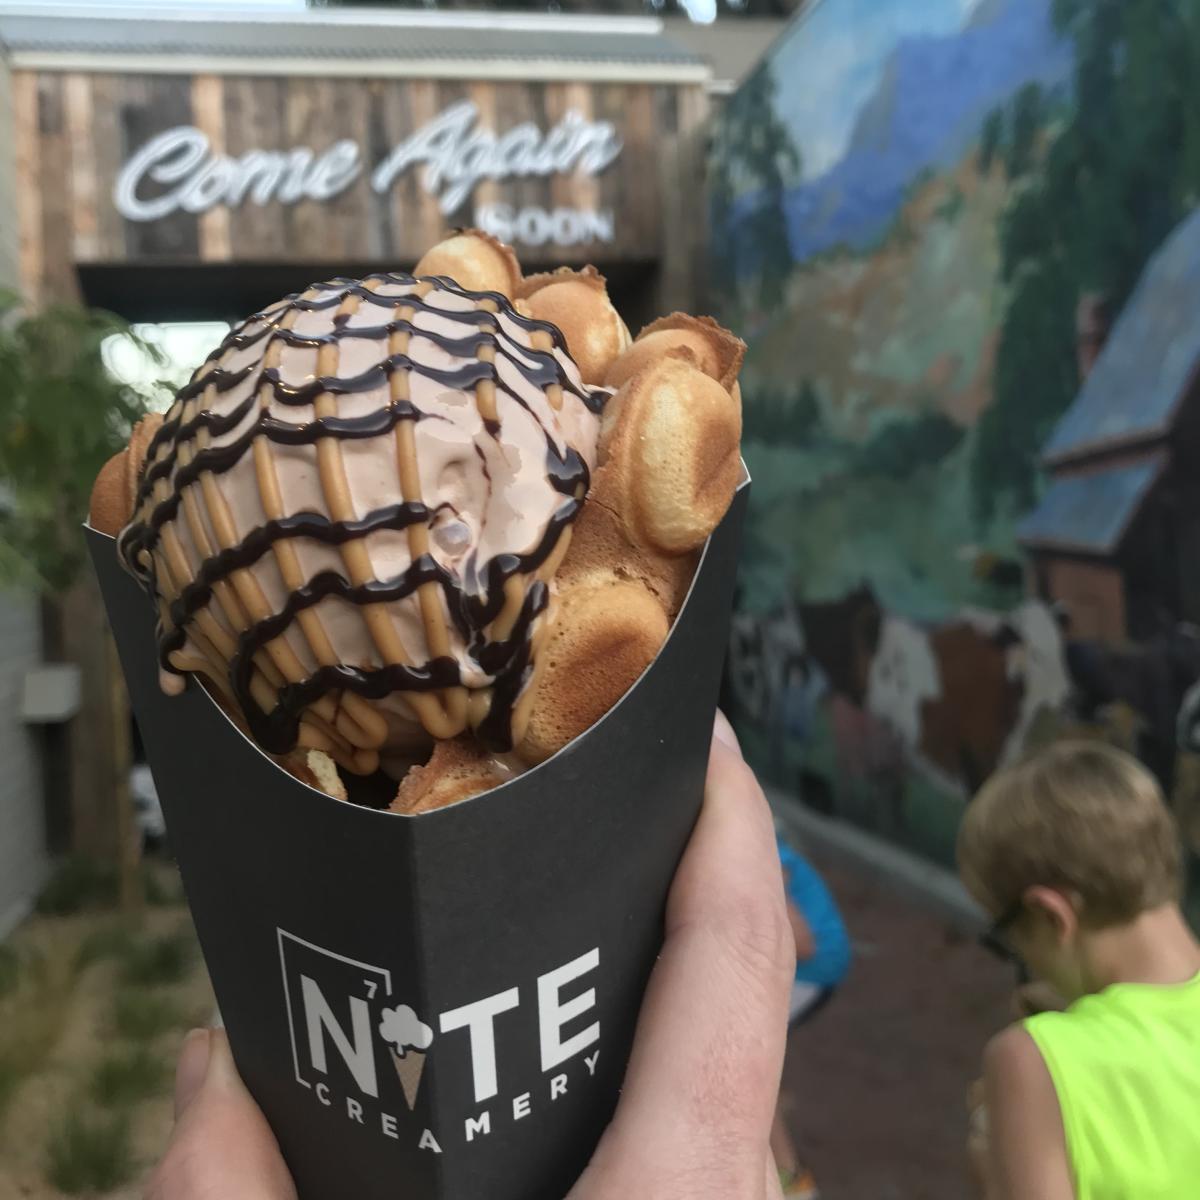 An ice cream cone from Nite Creamery